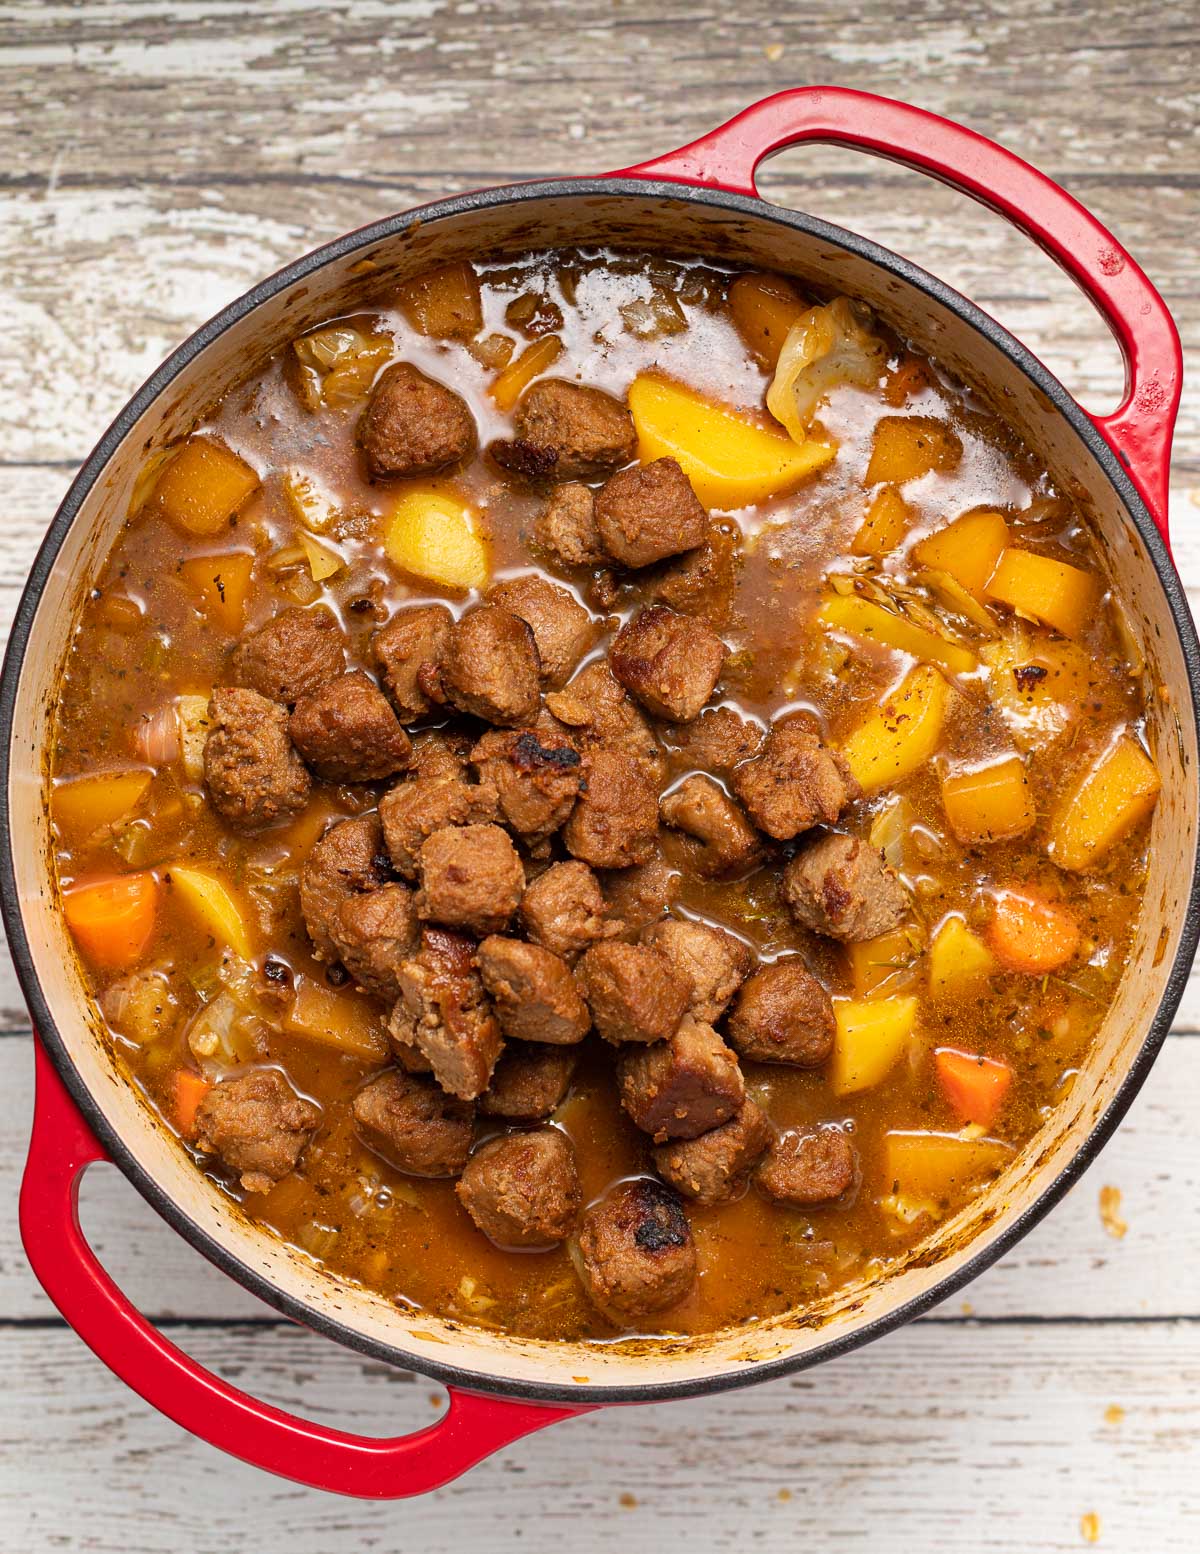 Vegan irish Stew with vegan meat pieces